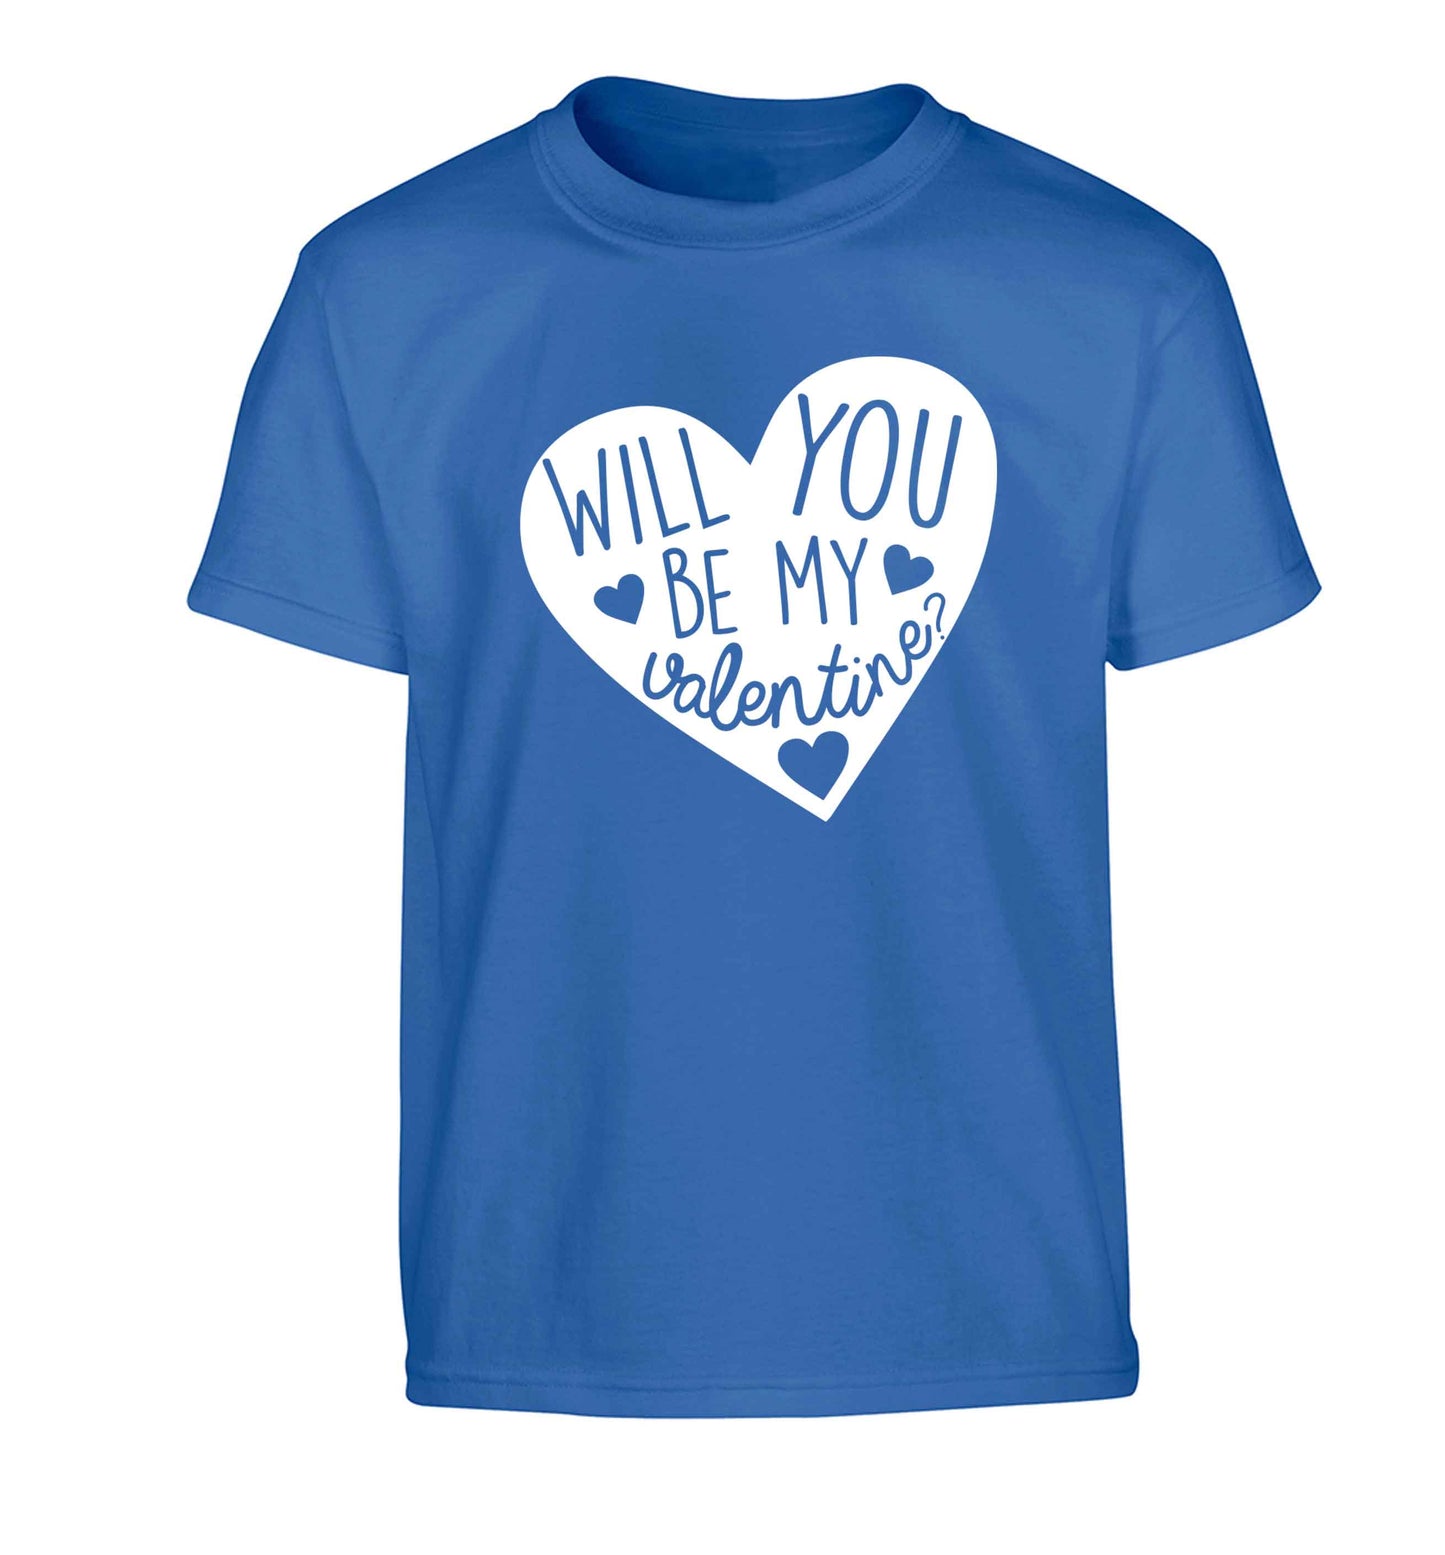 Will you be my valentine? Children's blue Tshirt 12-13 Years